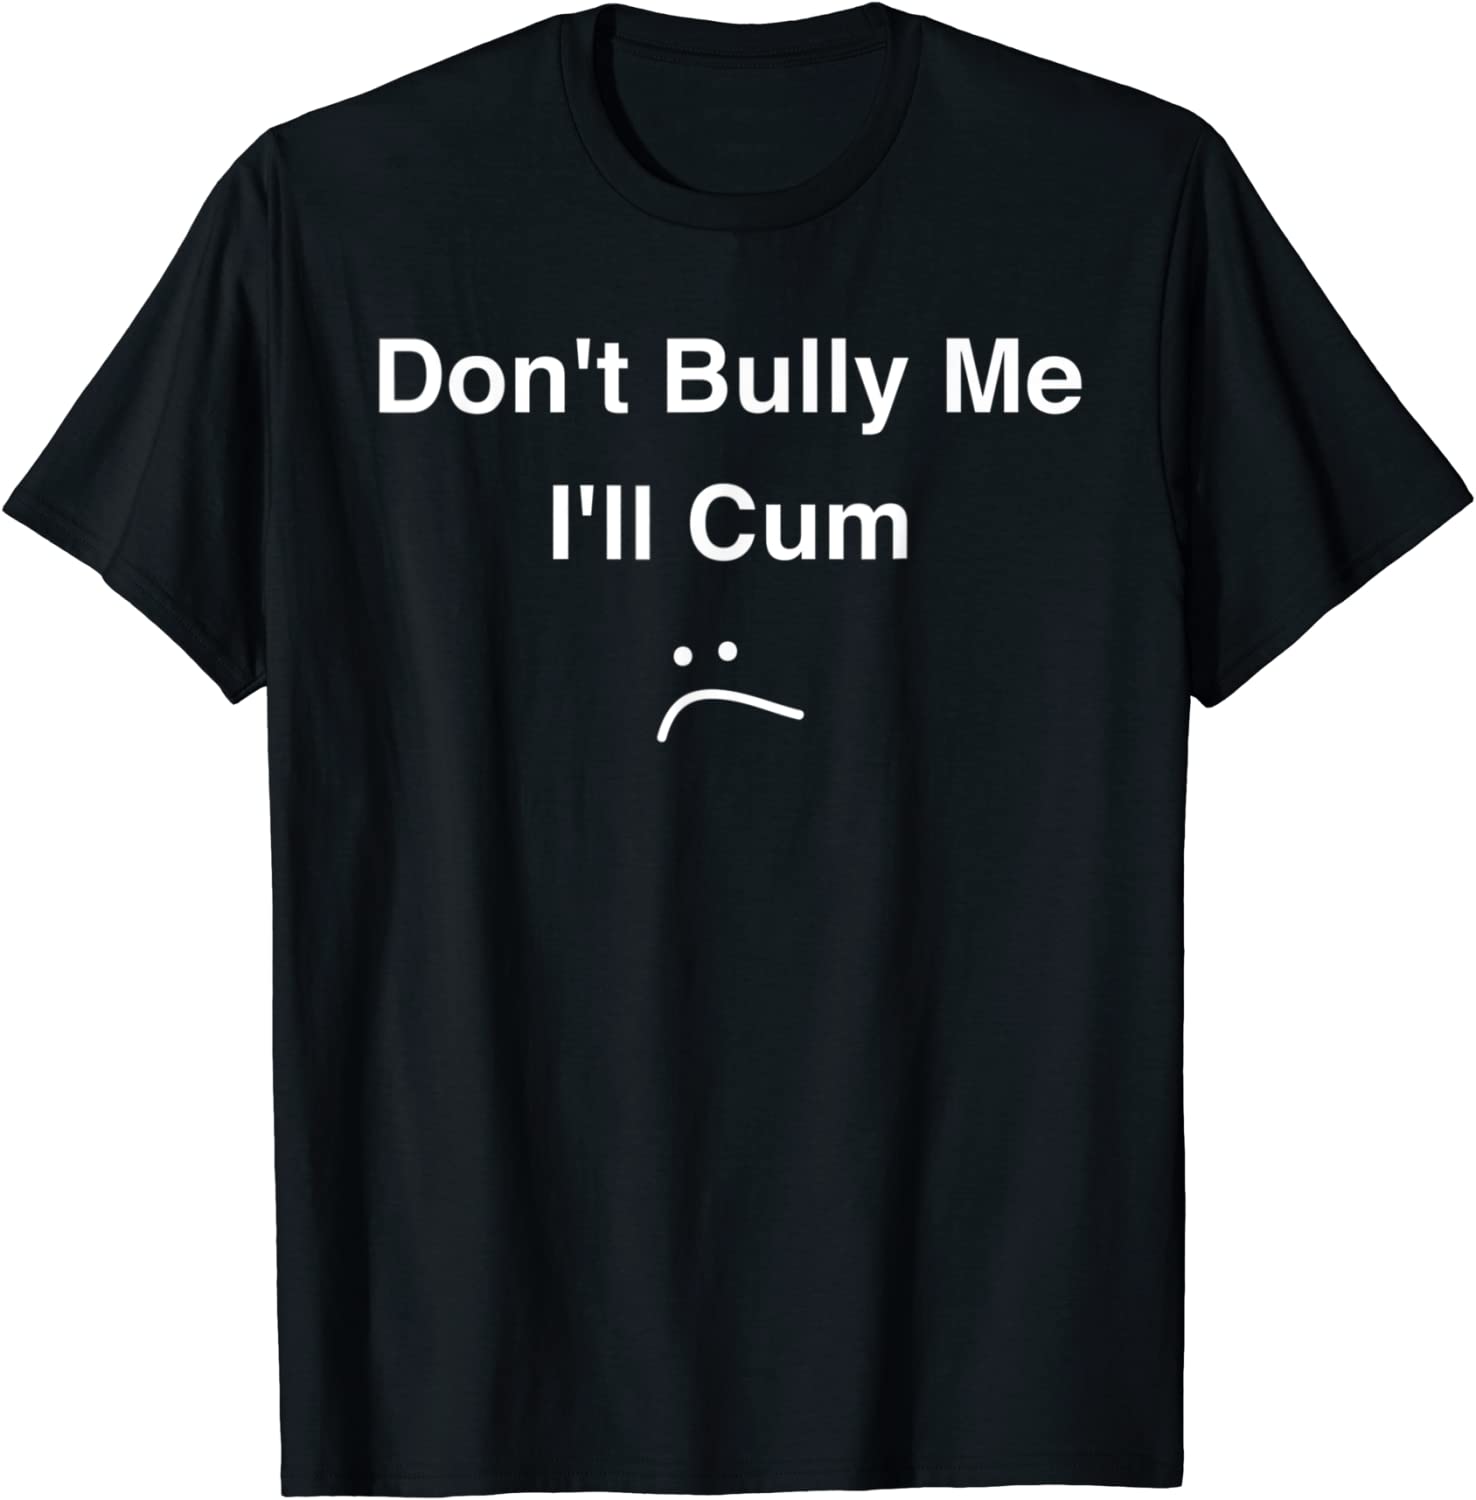 Don't Bully Me I'll Cum (56)